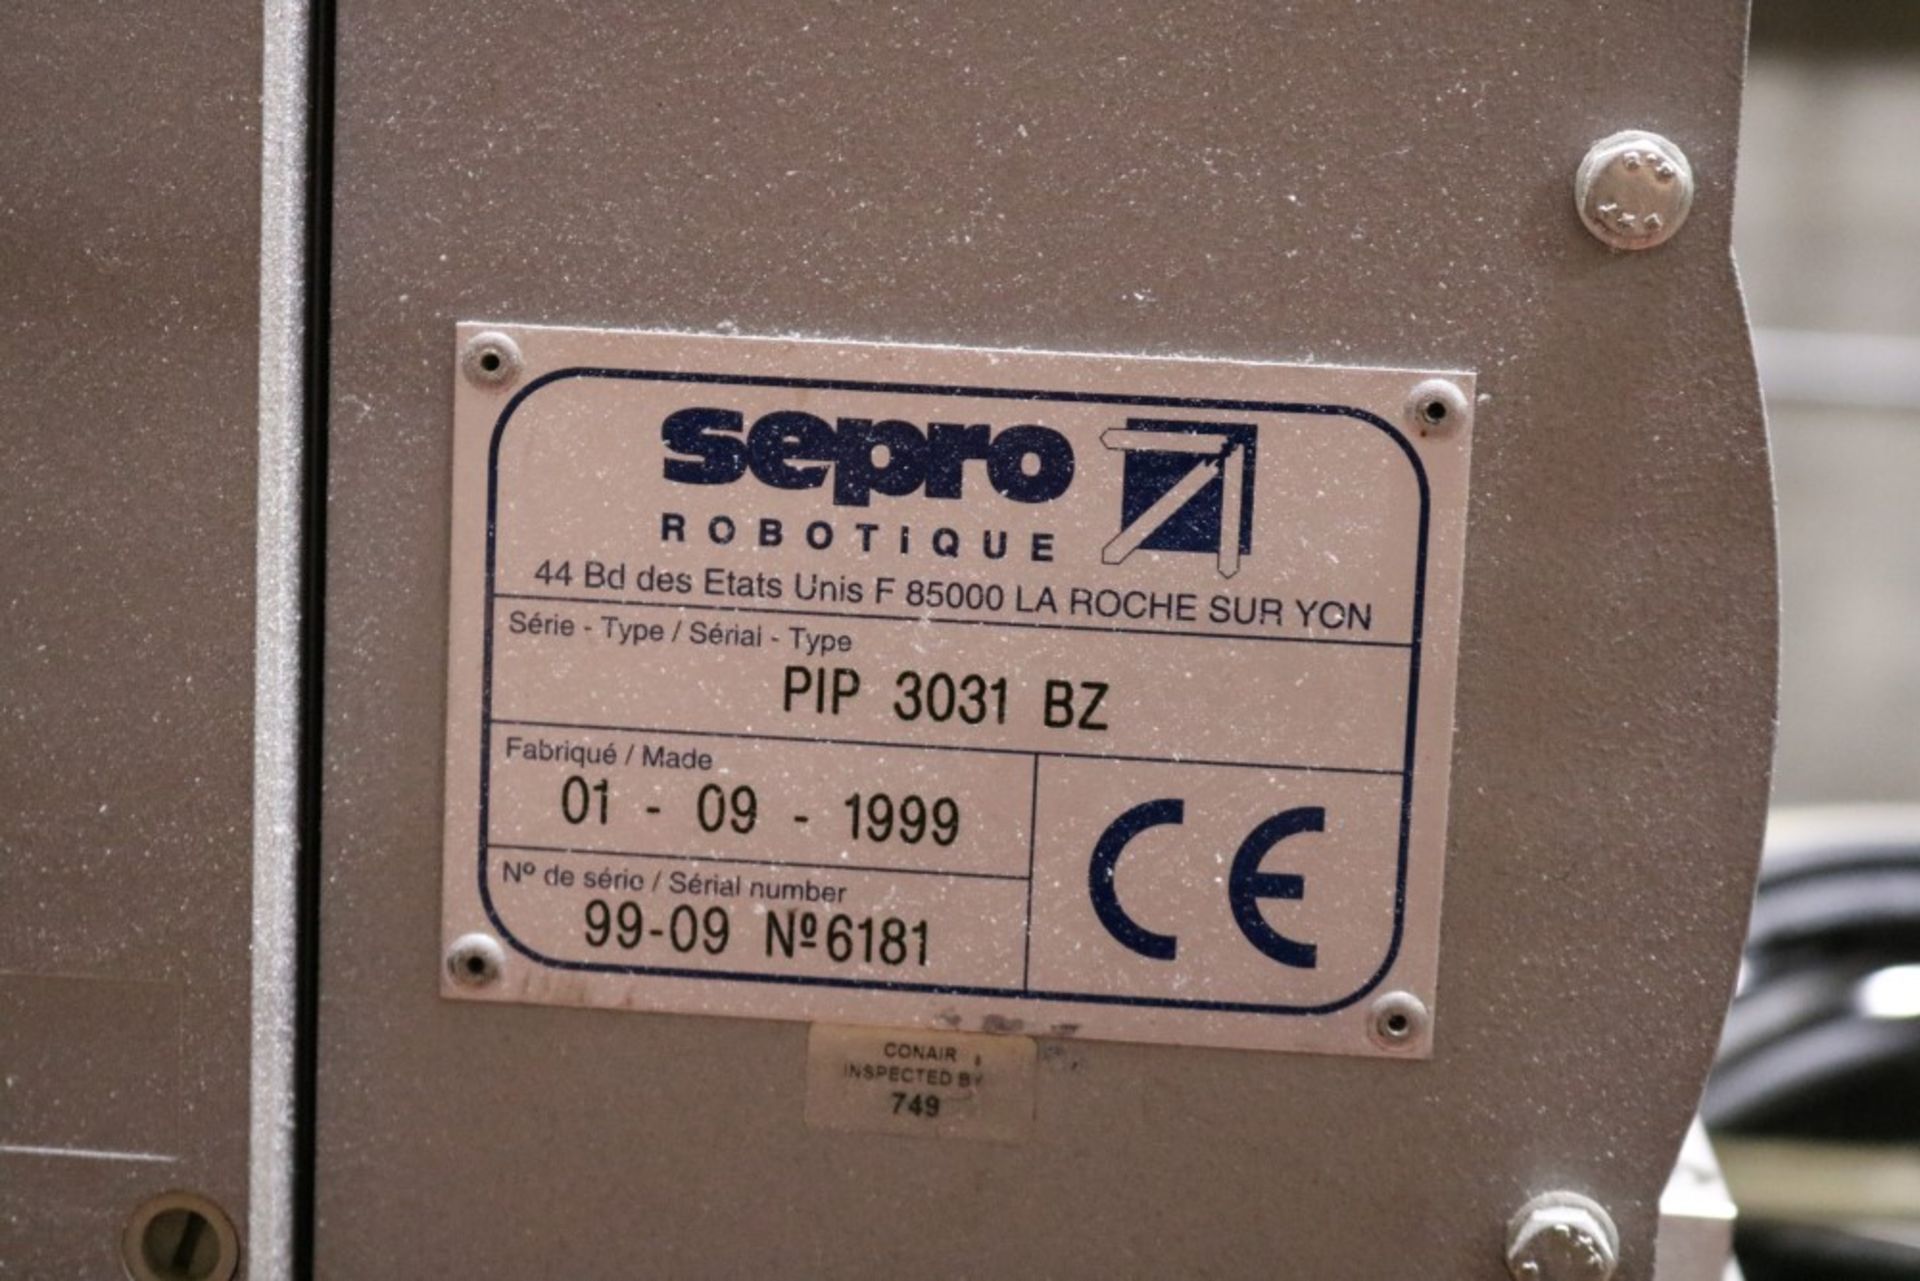 1999 Conair Sepro Robot - Robotique PIP 3031 BZ w/ Controller (Came off Item #132) - Image 5 of 11